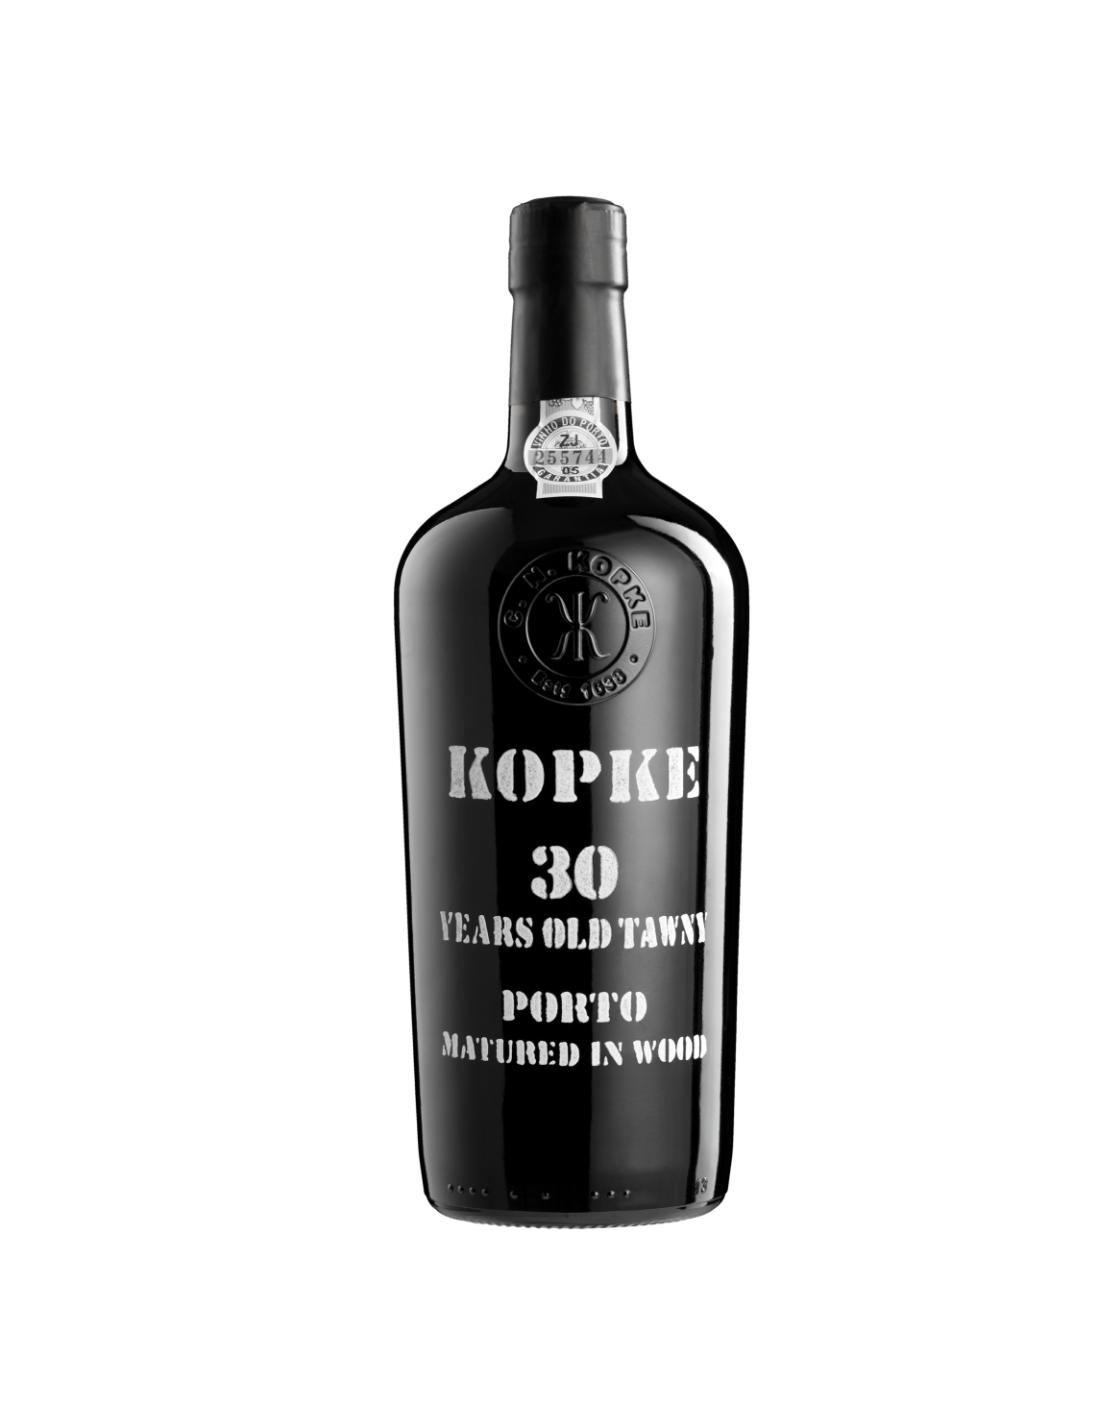 Vin porto rosu dulce Kopke 30 Years Old Tawny, 0.75L, 20% alc., Portugalia alcooldiscount.ro